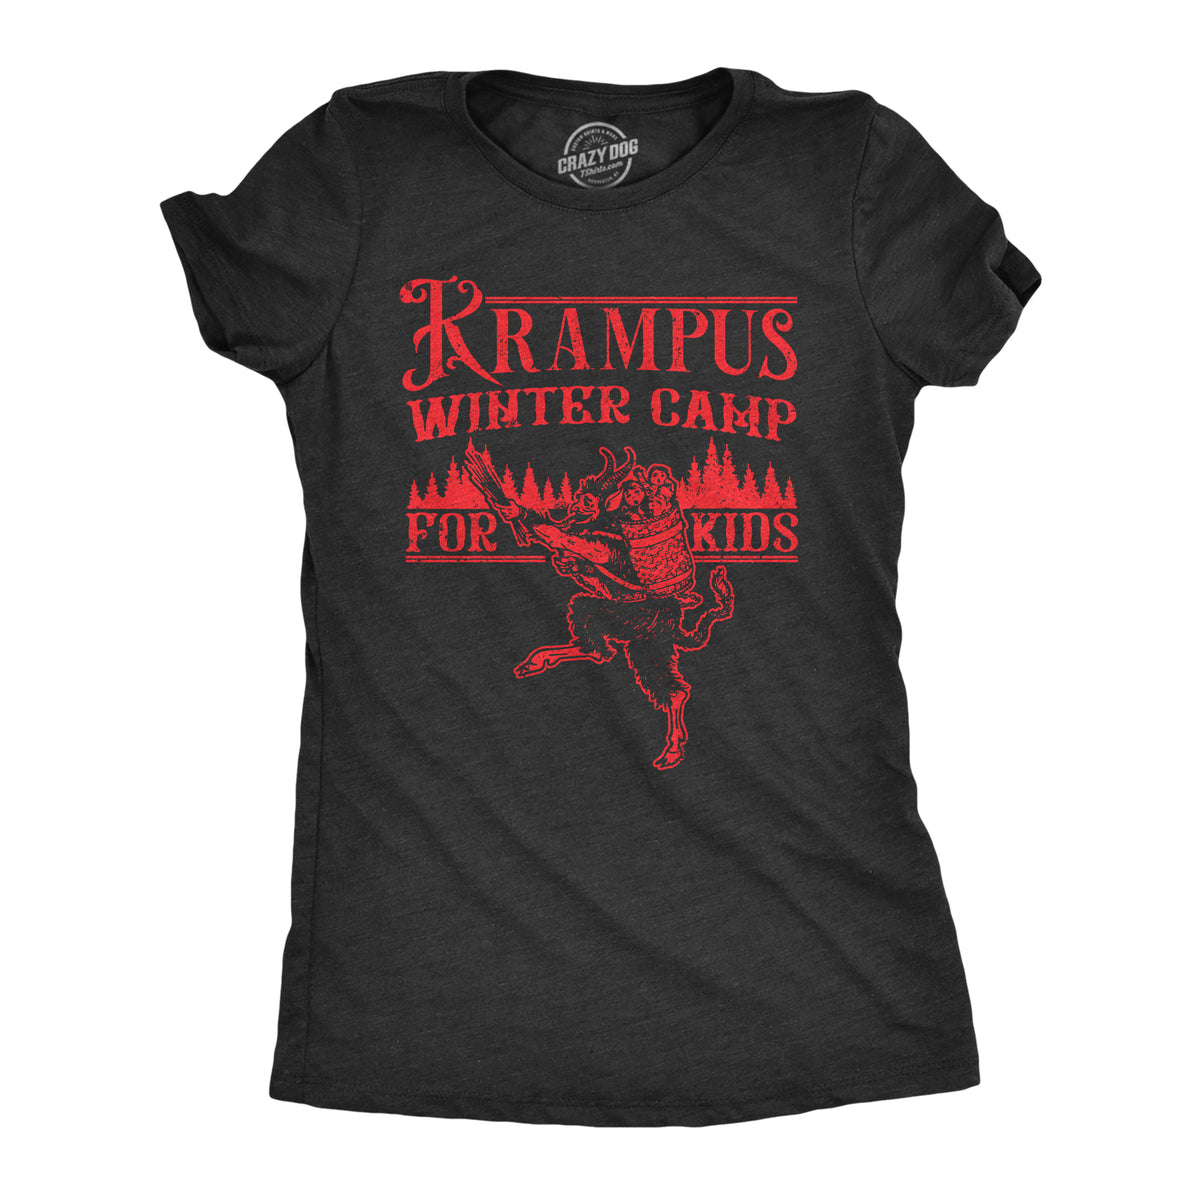 Funny Heather Black - KRAMPUS Krampus Winter Camp For Kids Womens T Shirt Nerdy Christmas sarcastic Tee